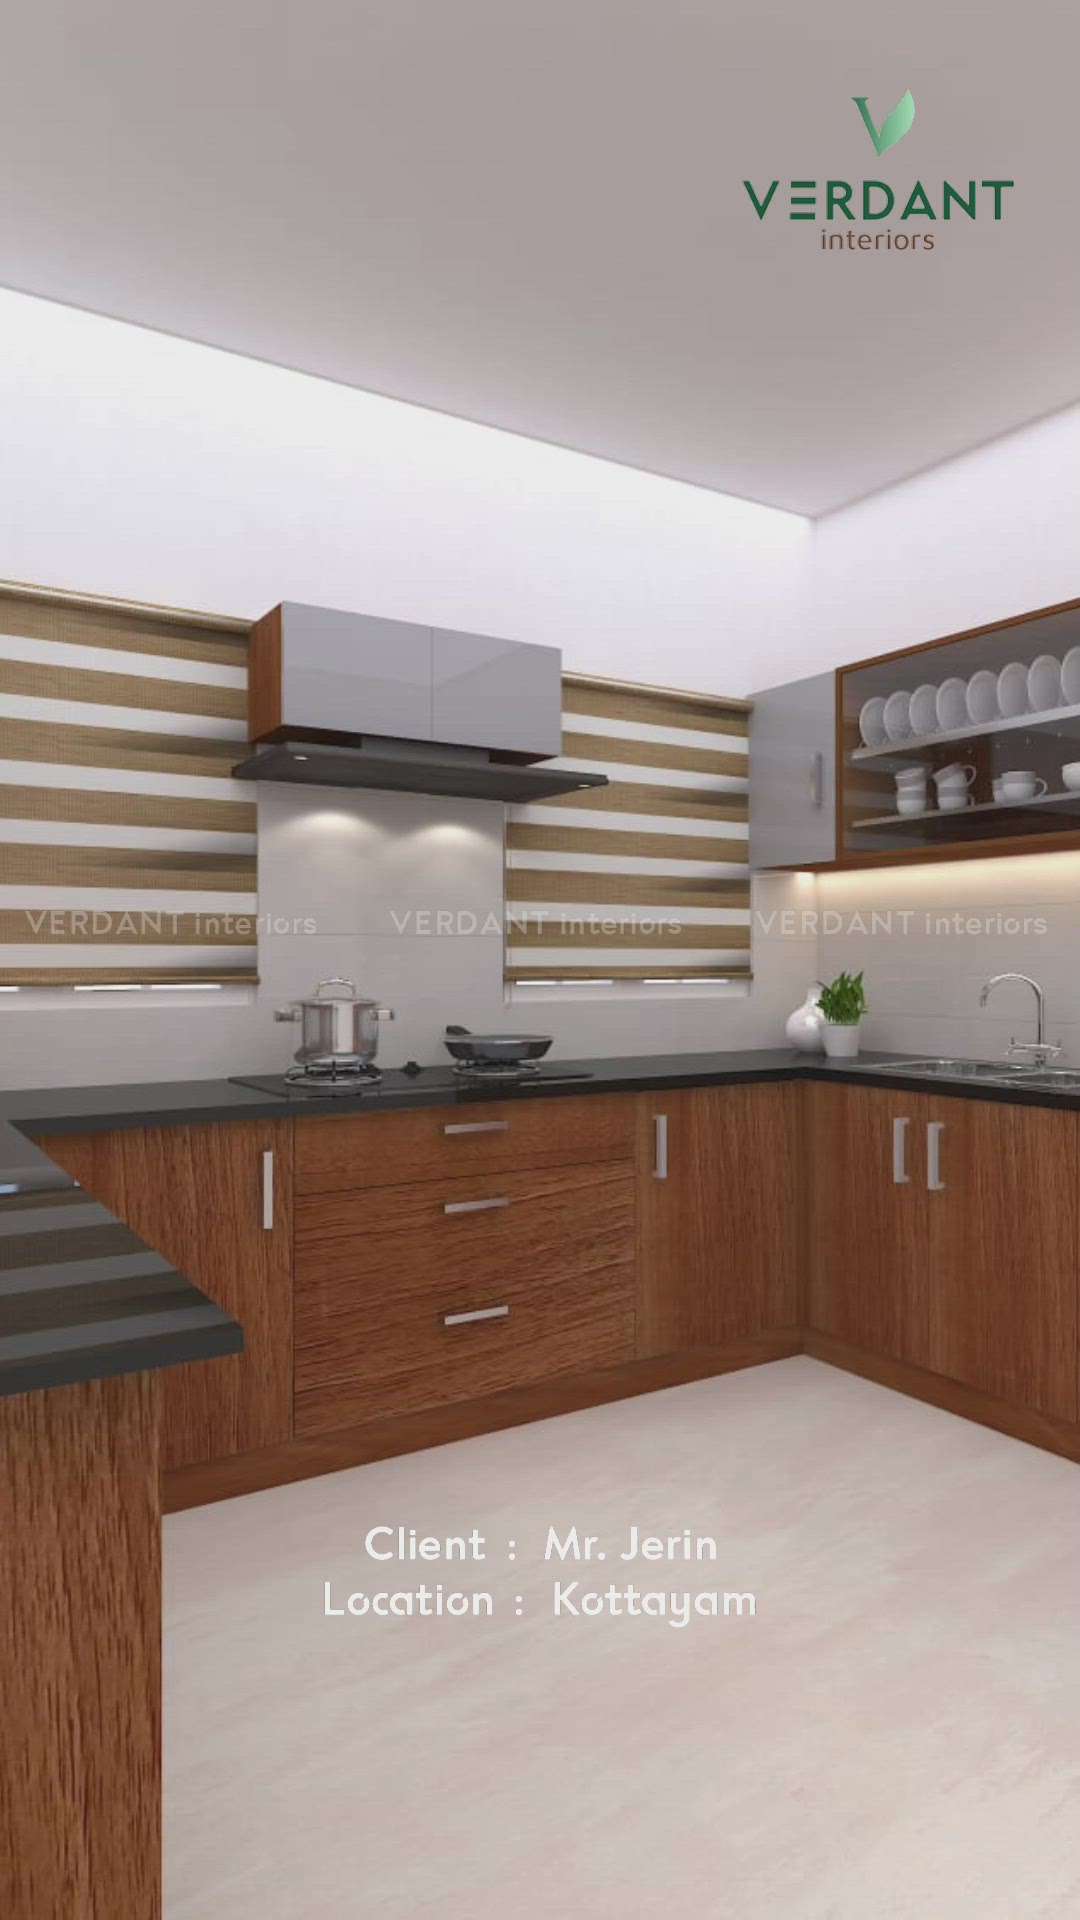 ✅ Kitchen Interior Designing - 3D Model 

Client name - Mr. Jerin
Location : Kottayam

Transforming Your Space Into A Heaven | For more info Visit - http://verdantinteriors.in/ l Call / Whatsapp : +91 9847203232

Verdant Interiors
Kurumbanadom , Changanacherry
Kottayam 686536

#home #architect #interiordesigner #verdantinteriors #verdantinteriorskottayam #interiordesignerskottayam #kottayam #reels #intstagram #trendingdesign